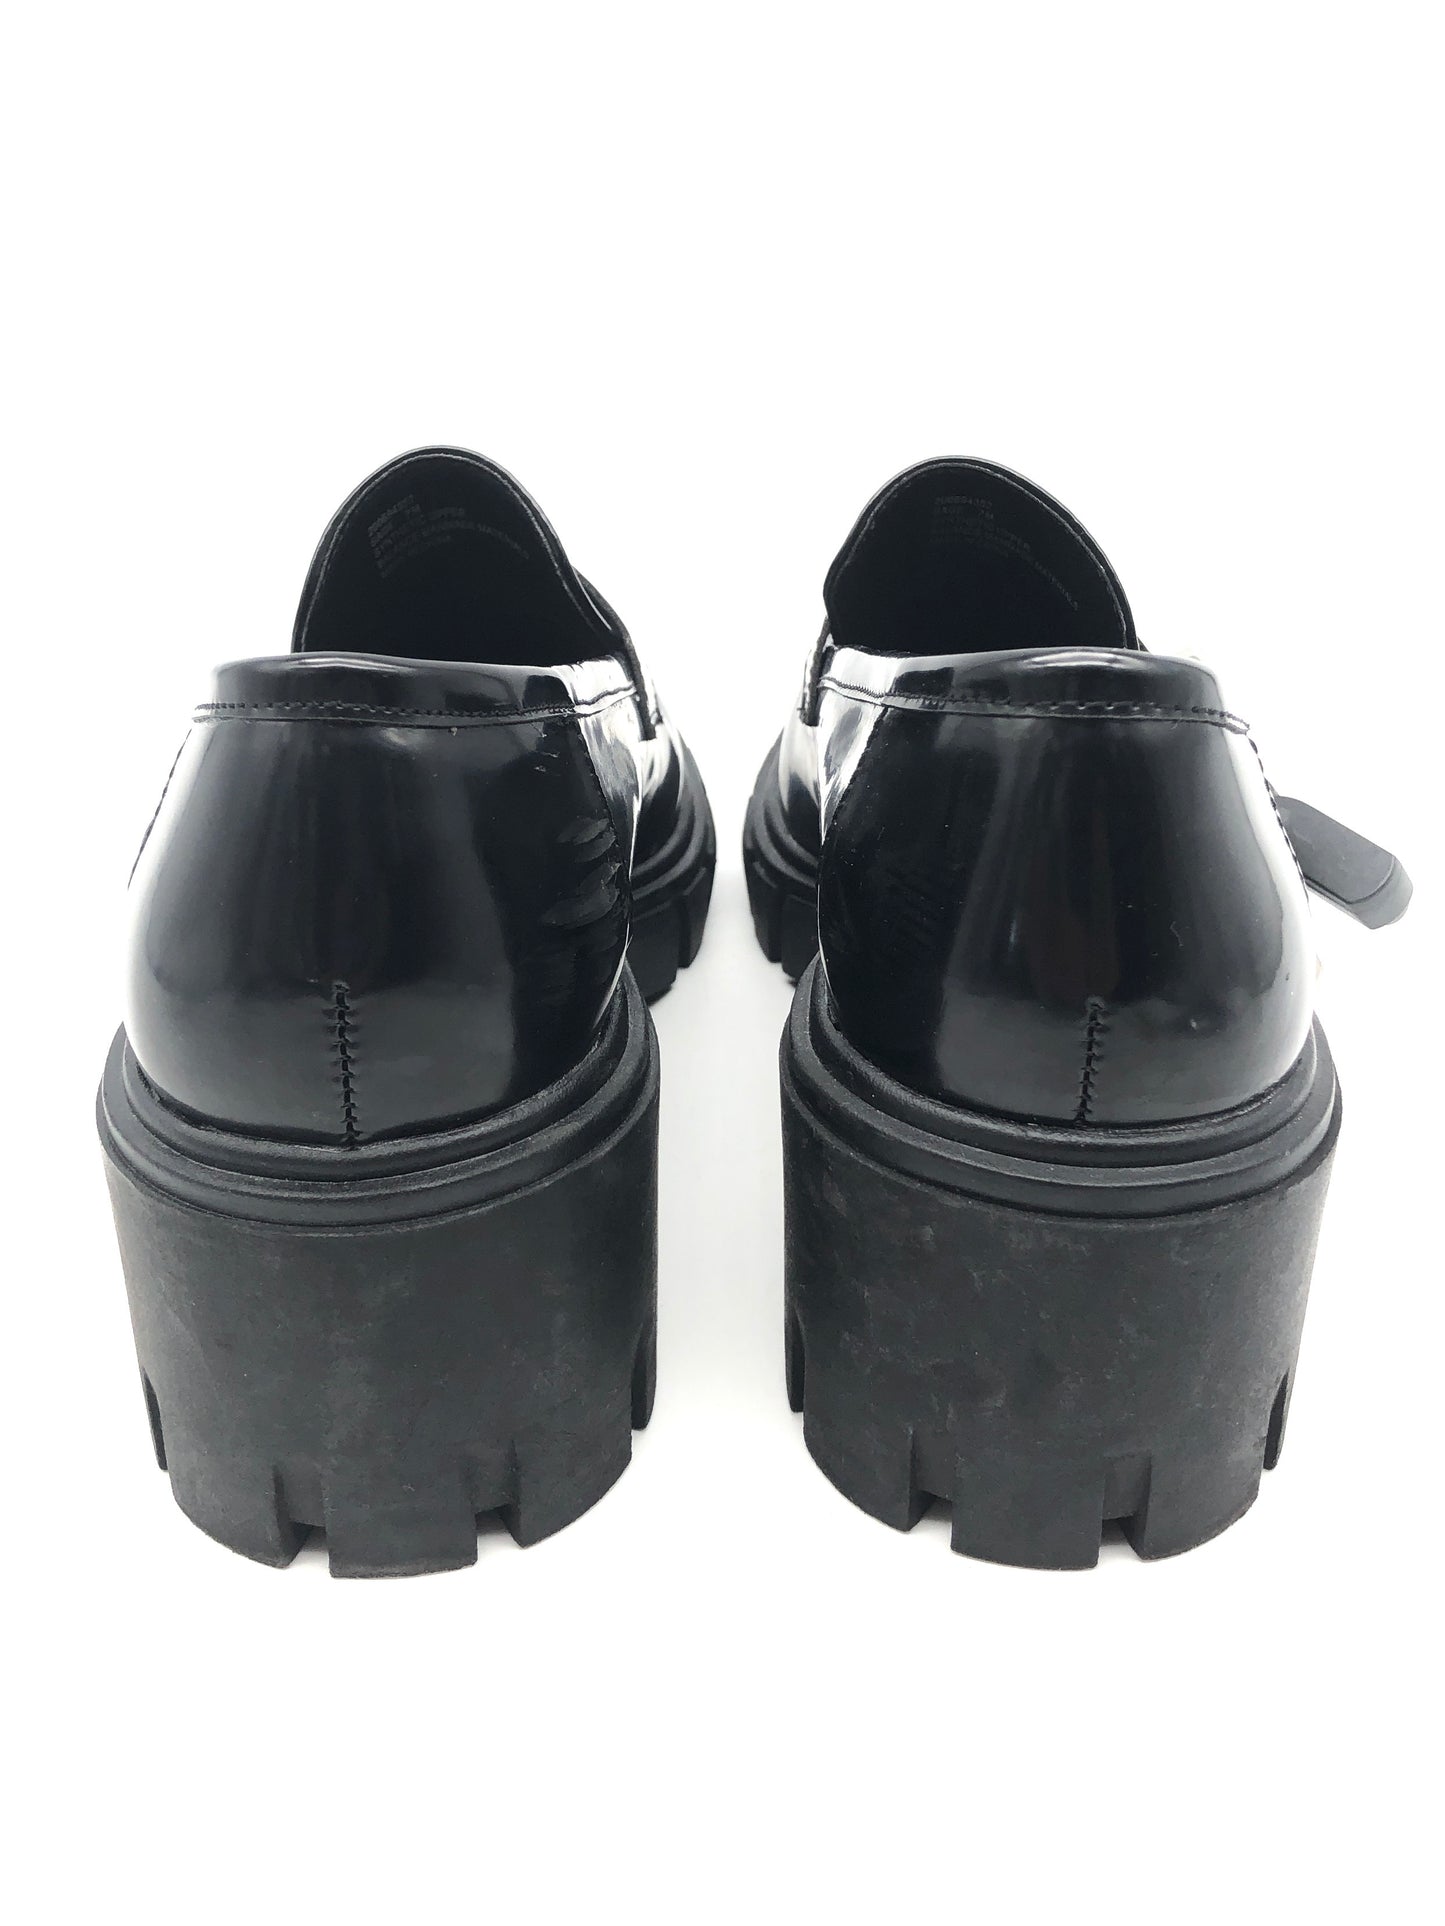 Shoes Heels Block By Crown Vintage  Size: 7